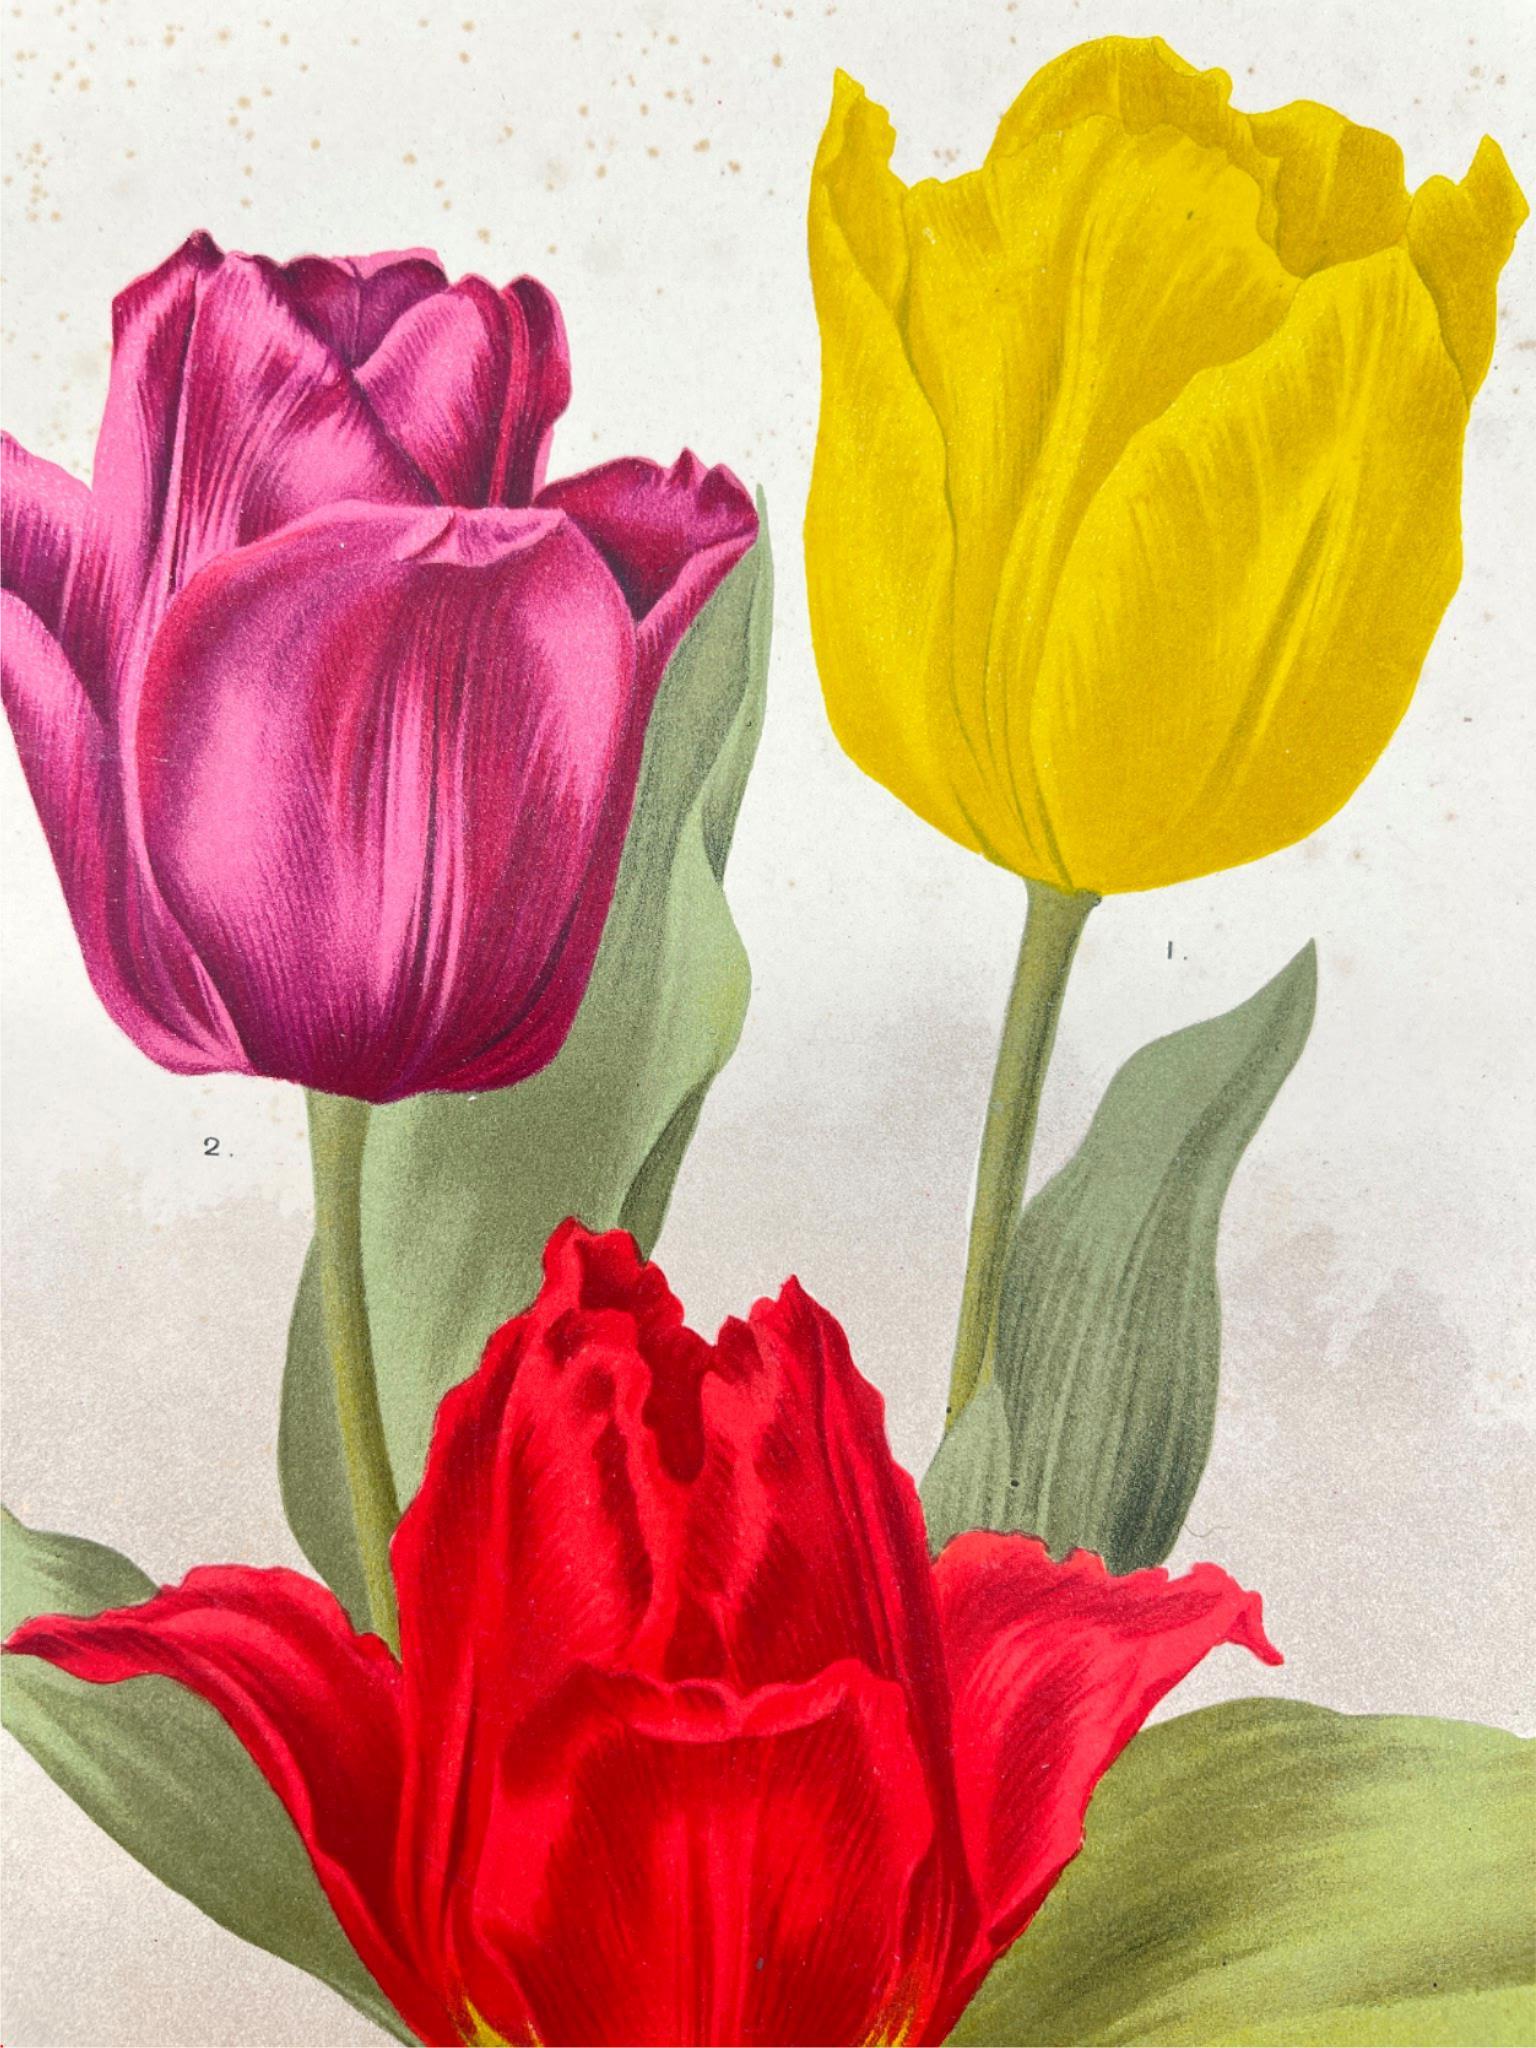 Antique Botanical Print - Flower Art - Tulip - Vander Neer - Goffart & Severeijn - Dahlströms Fine Art